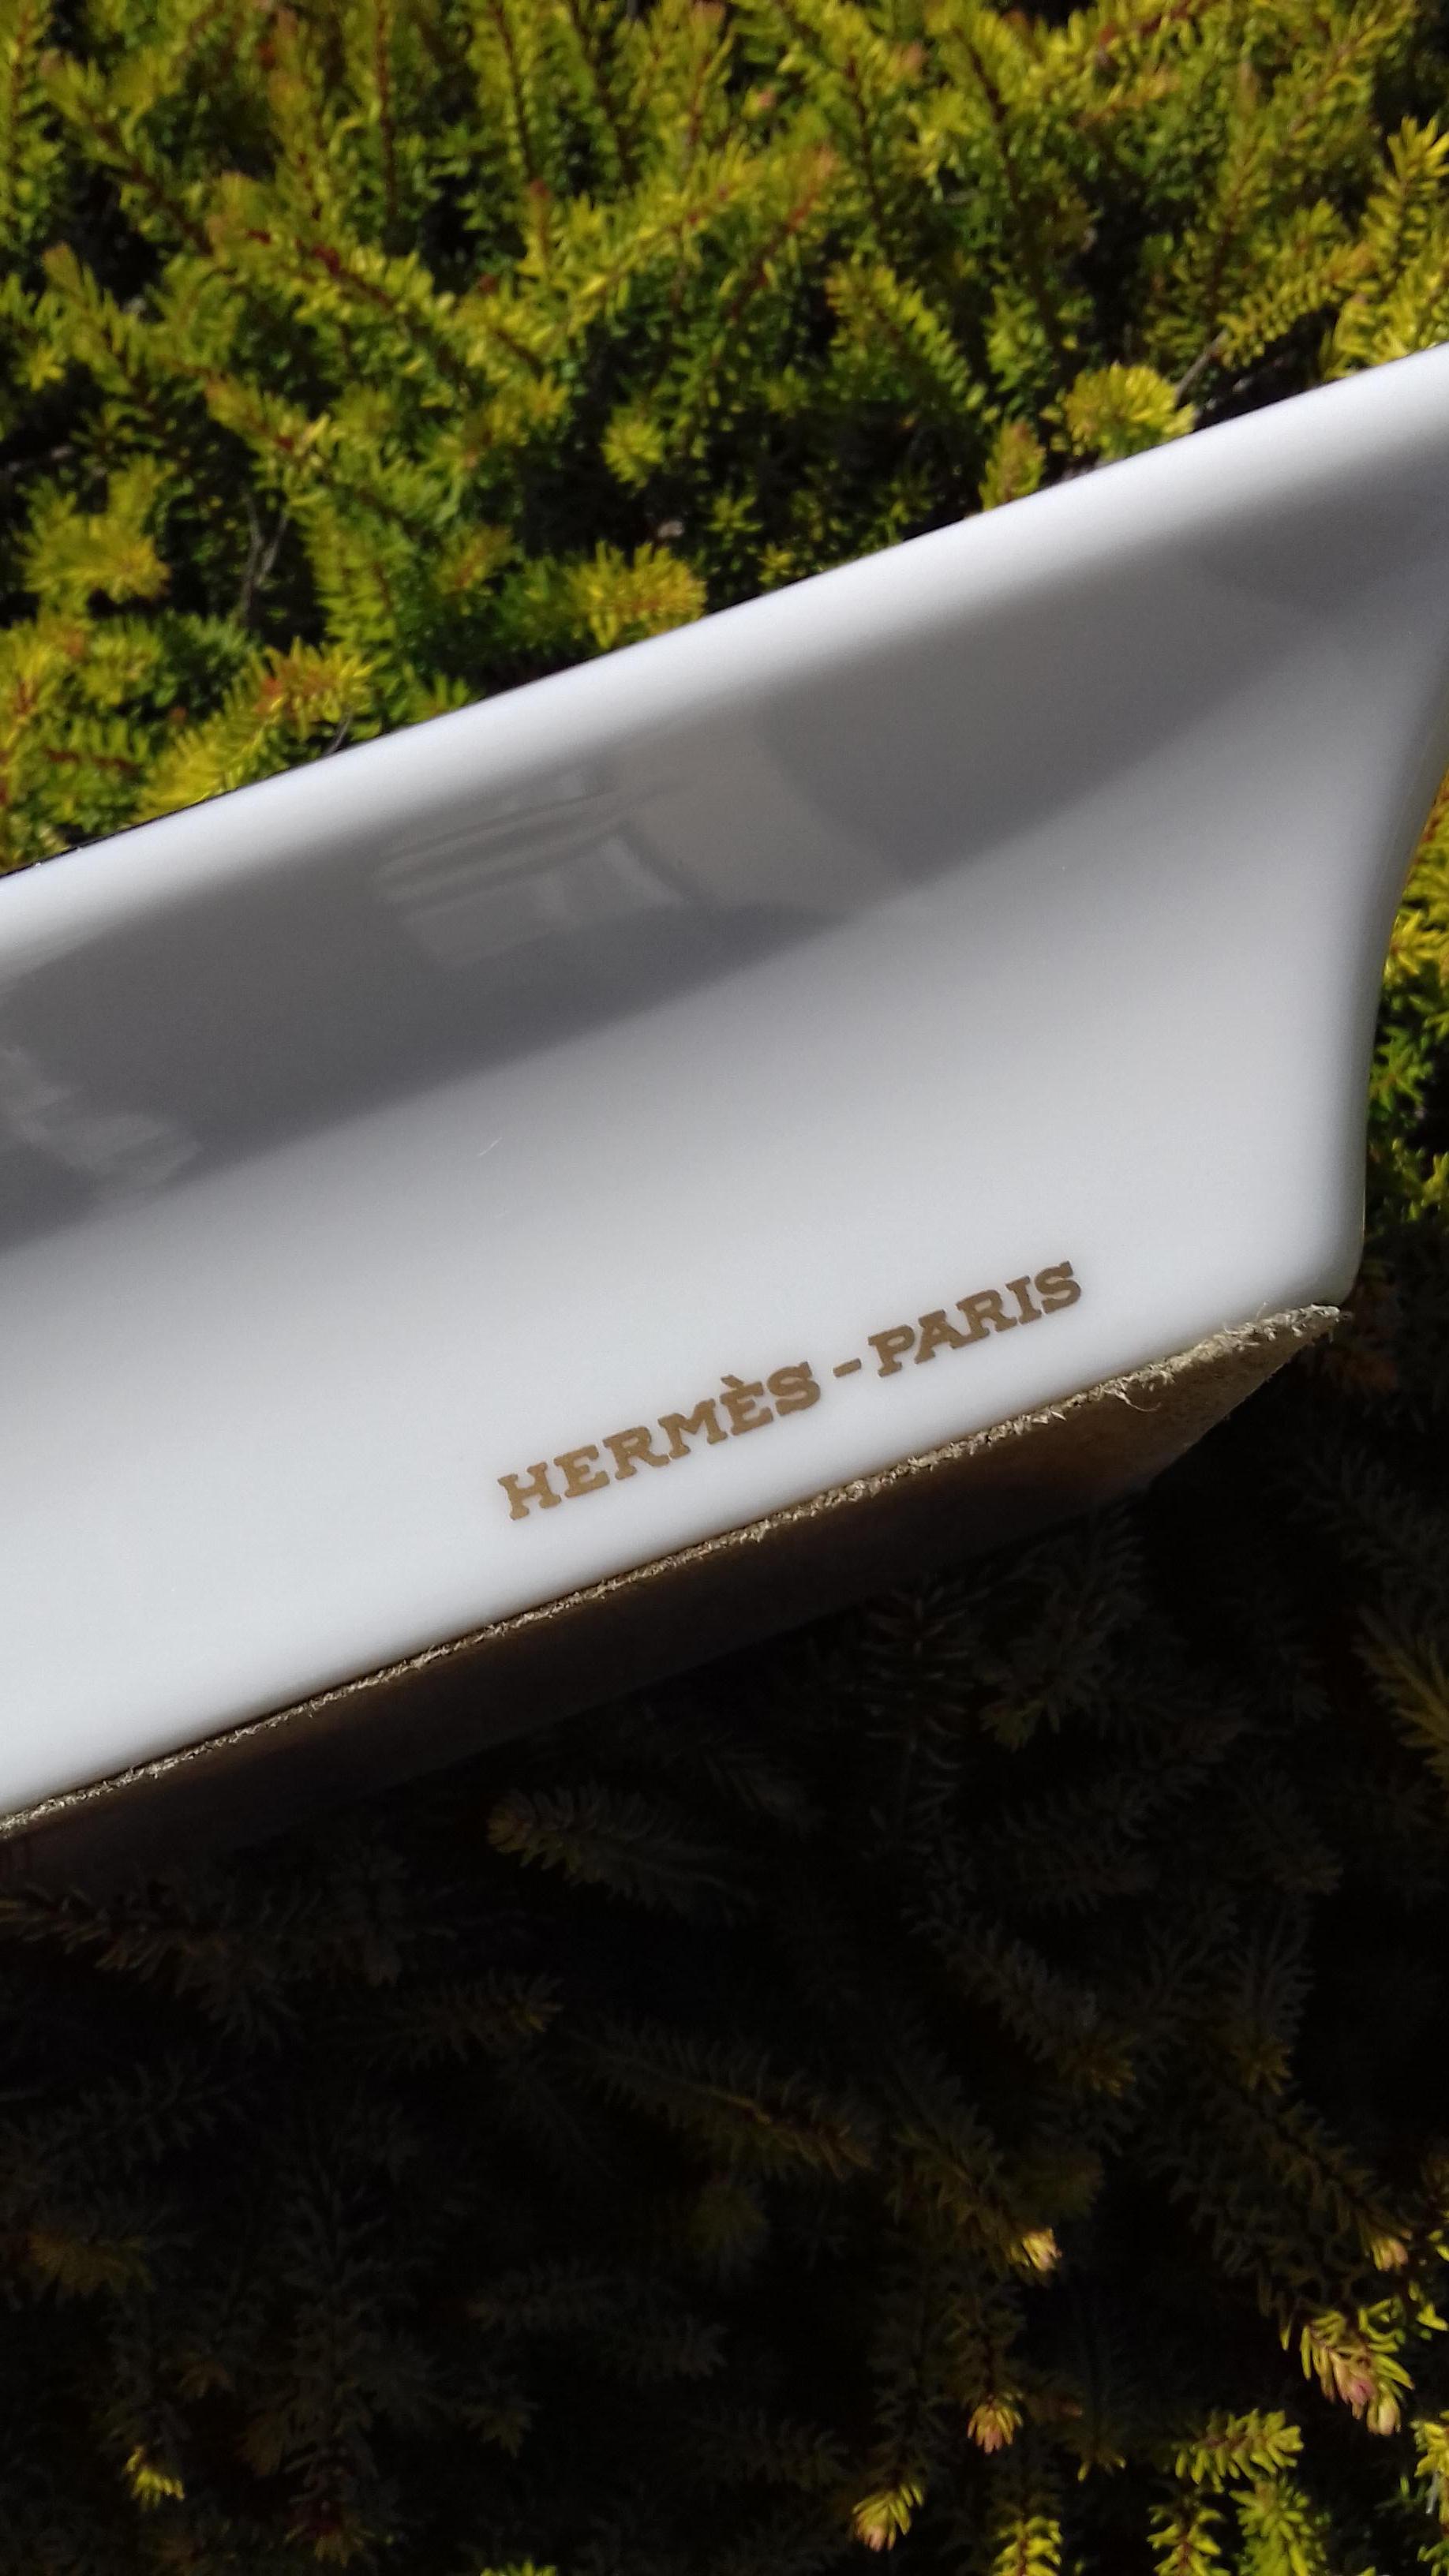 Hermès Printed Porcelain Cigar Ashtray Change Tray Cowboy Hats Rodeo Texas RARE 10